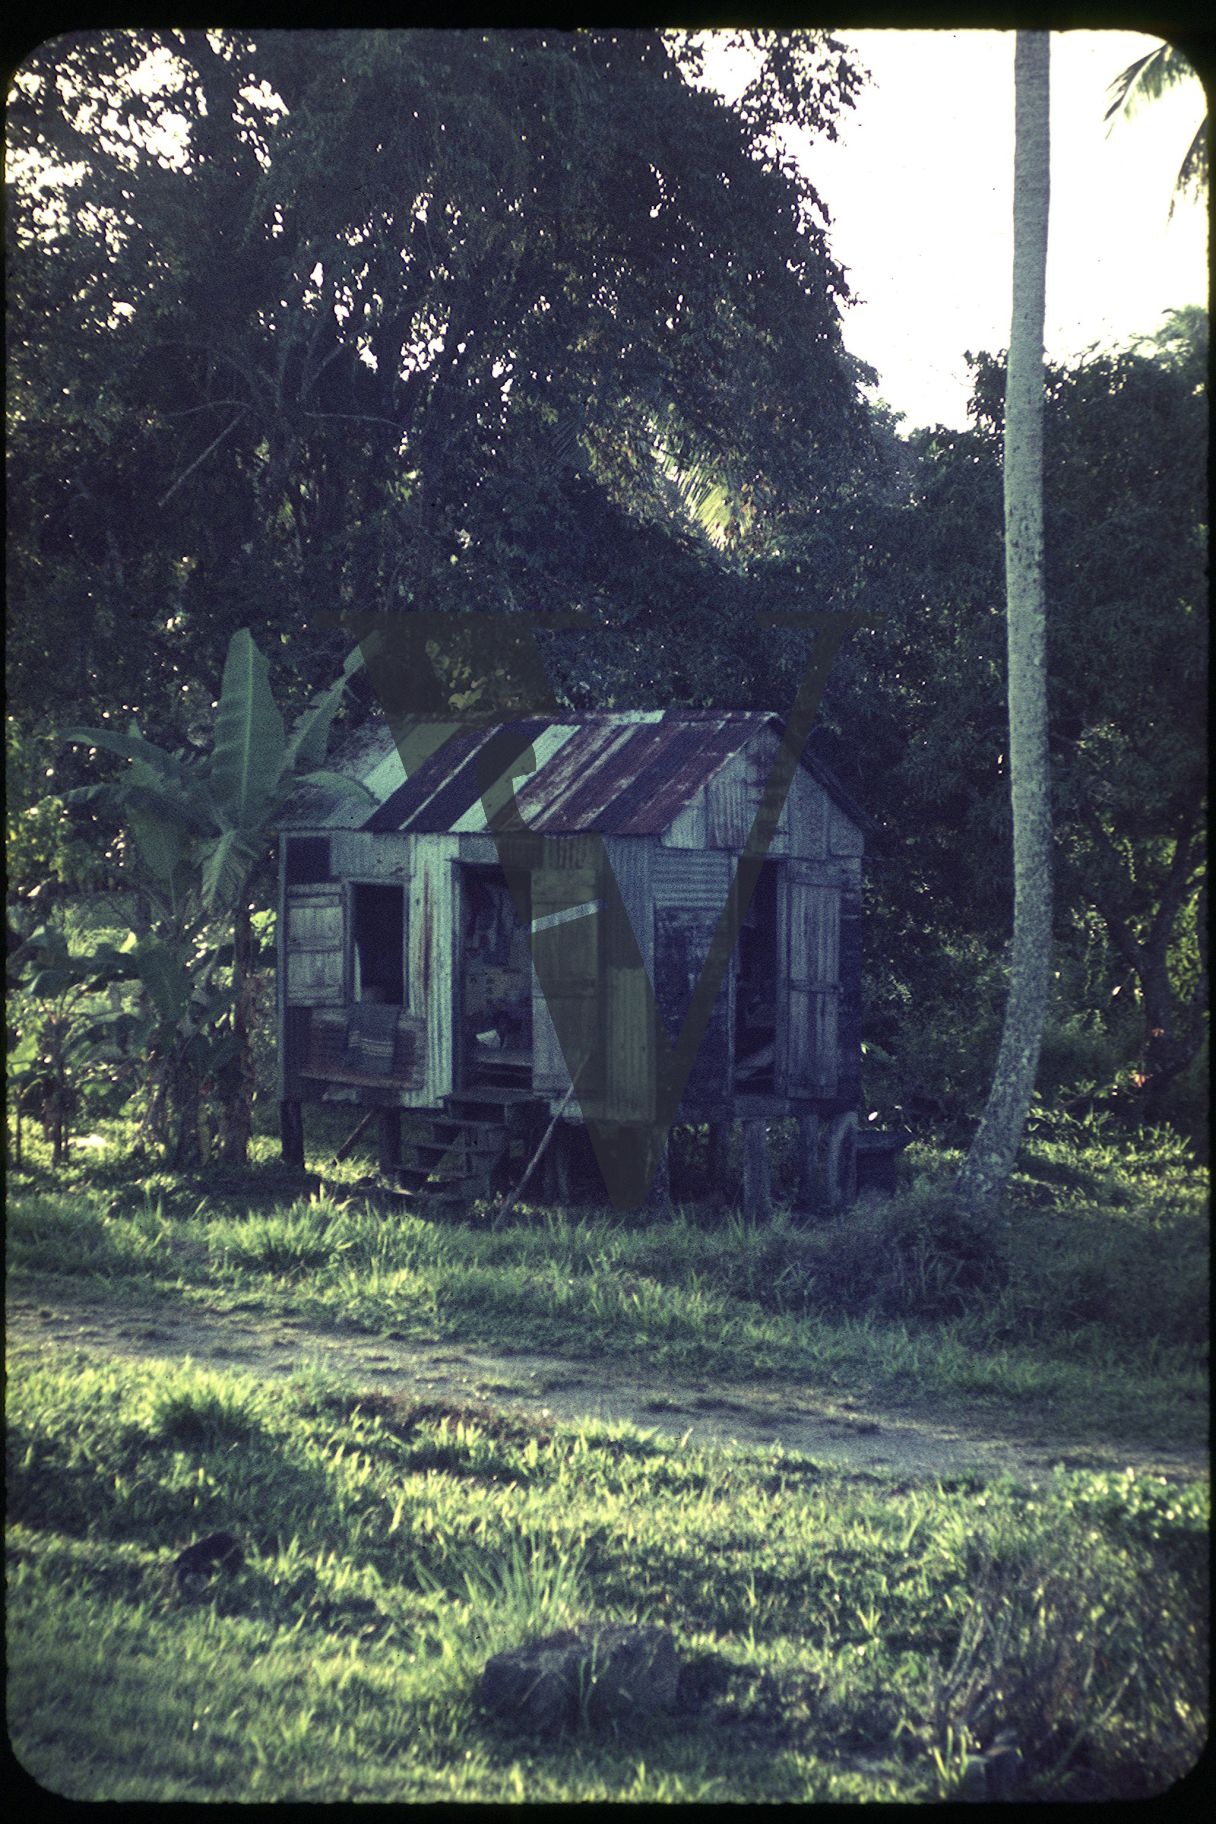 Belize, Punta Gorda, Tin shack on stilts.